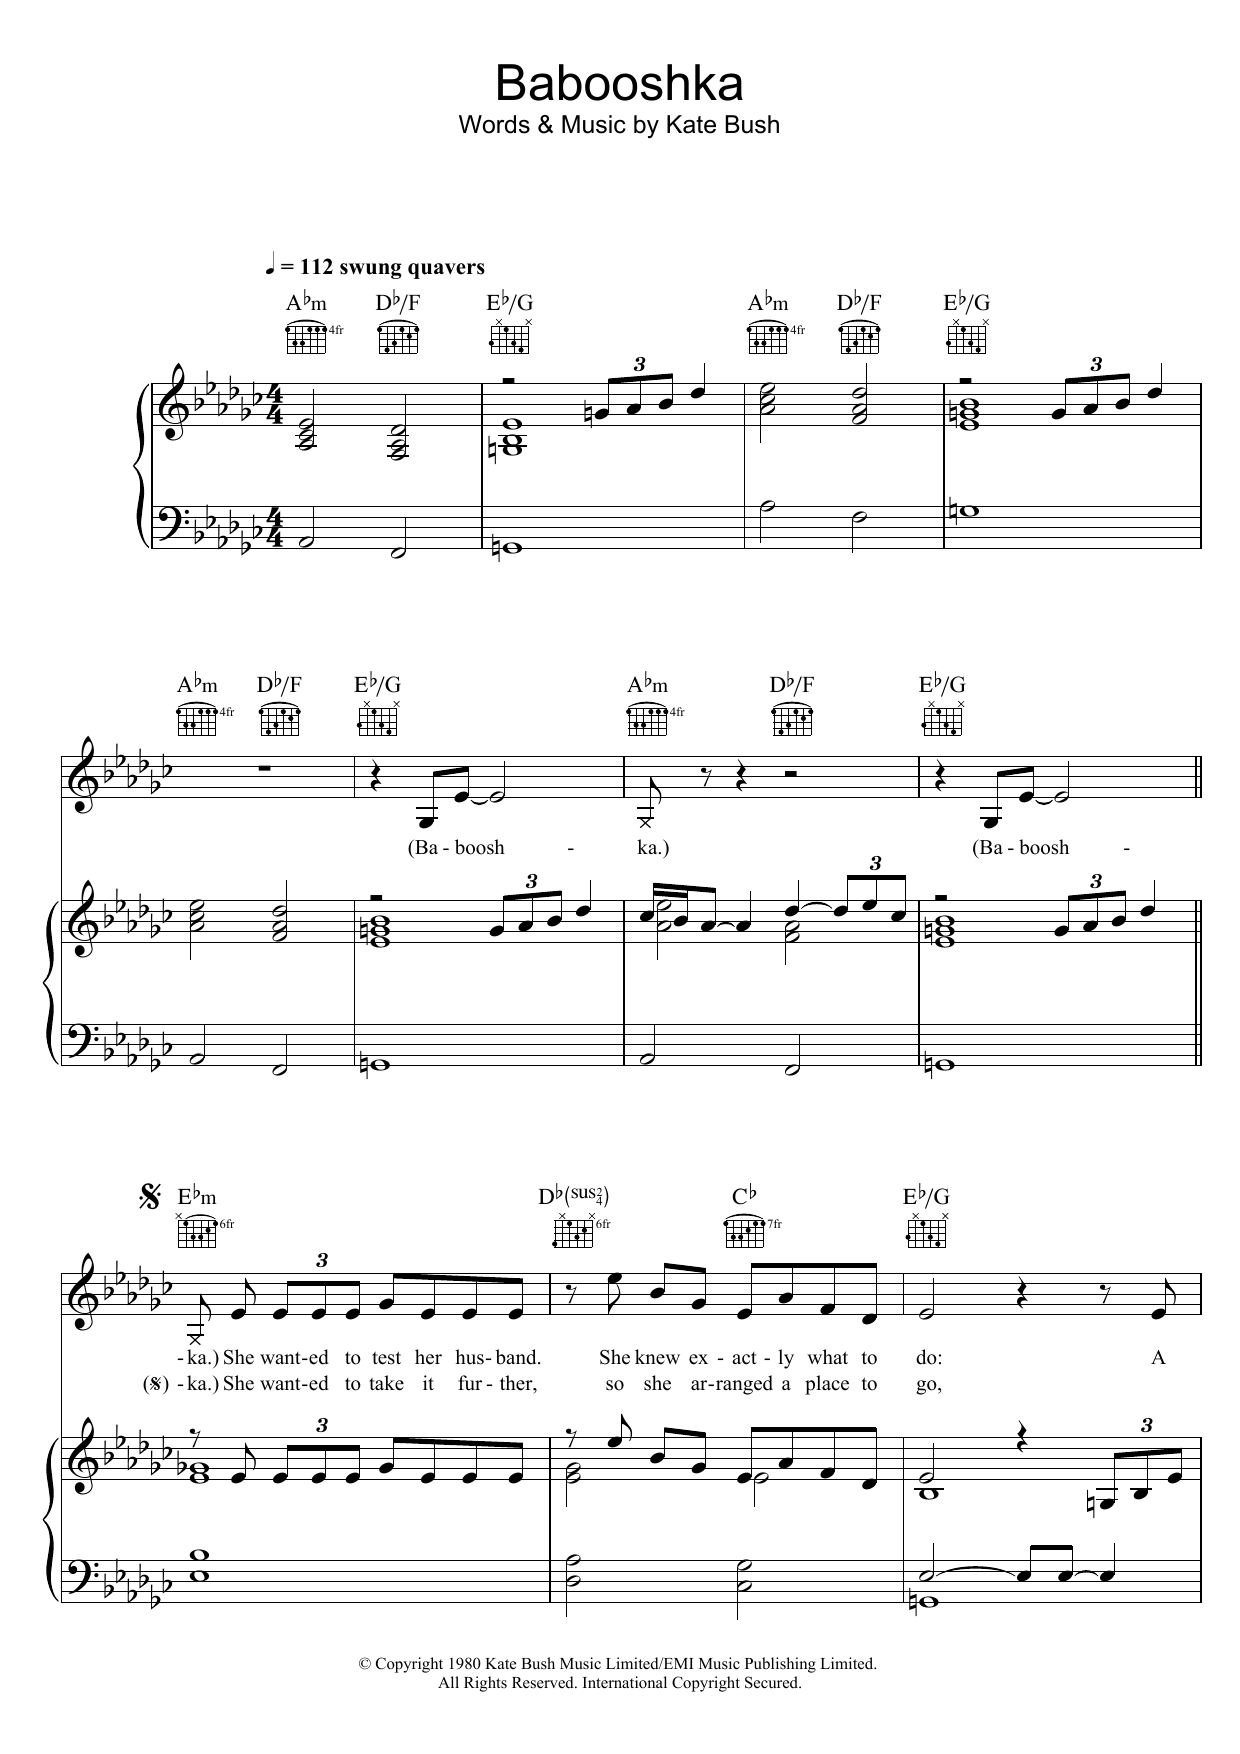 Babooshka Sheet Music By Kate Bush For Piano Keyboard And Voice Noteflight Marketplace Backing track for piano player. babooshka